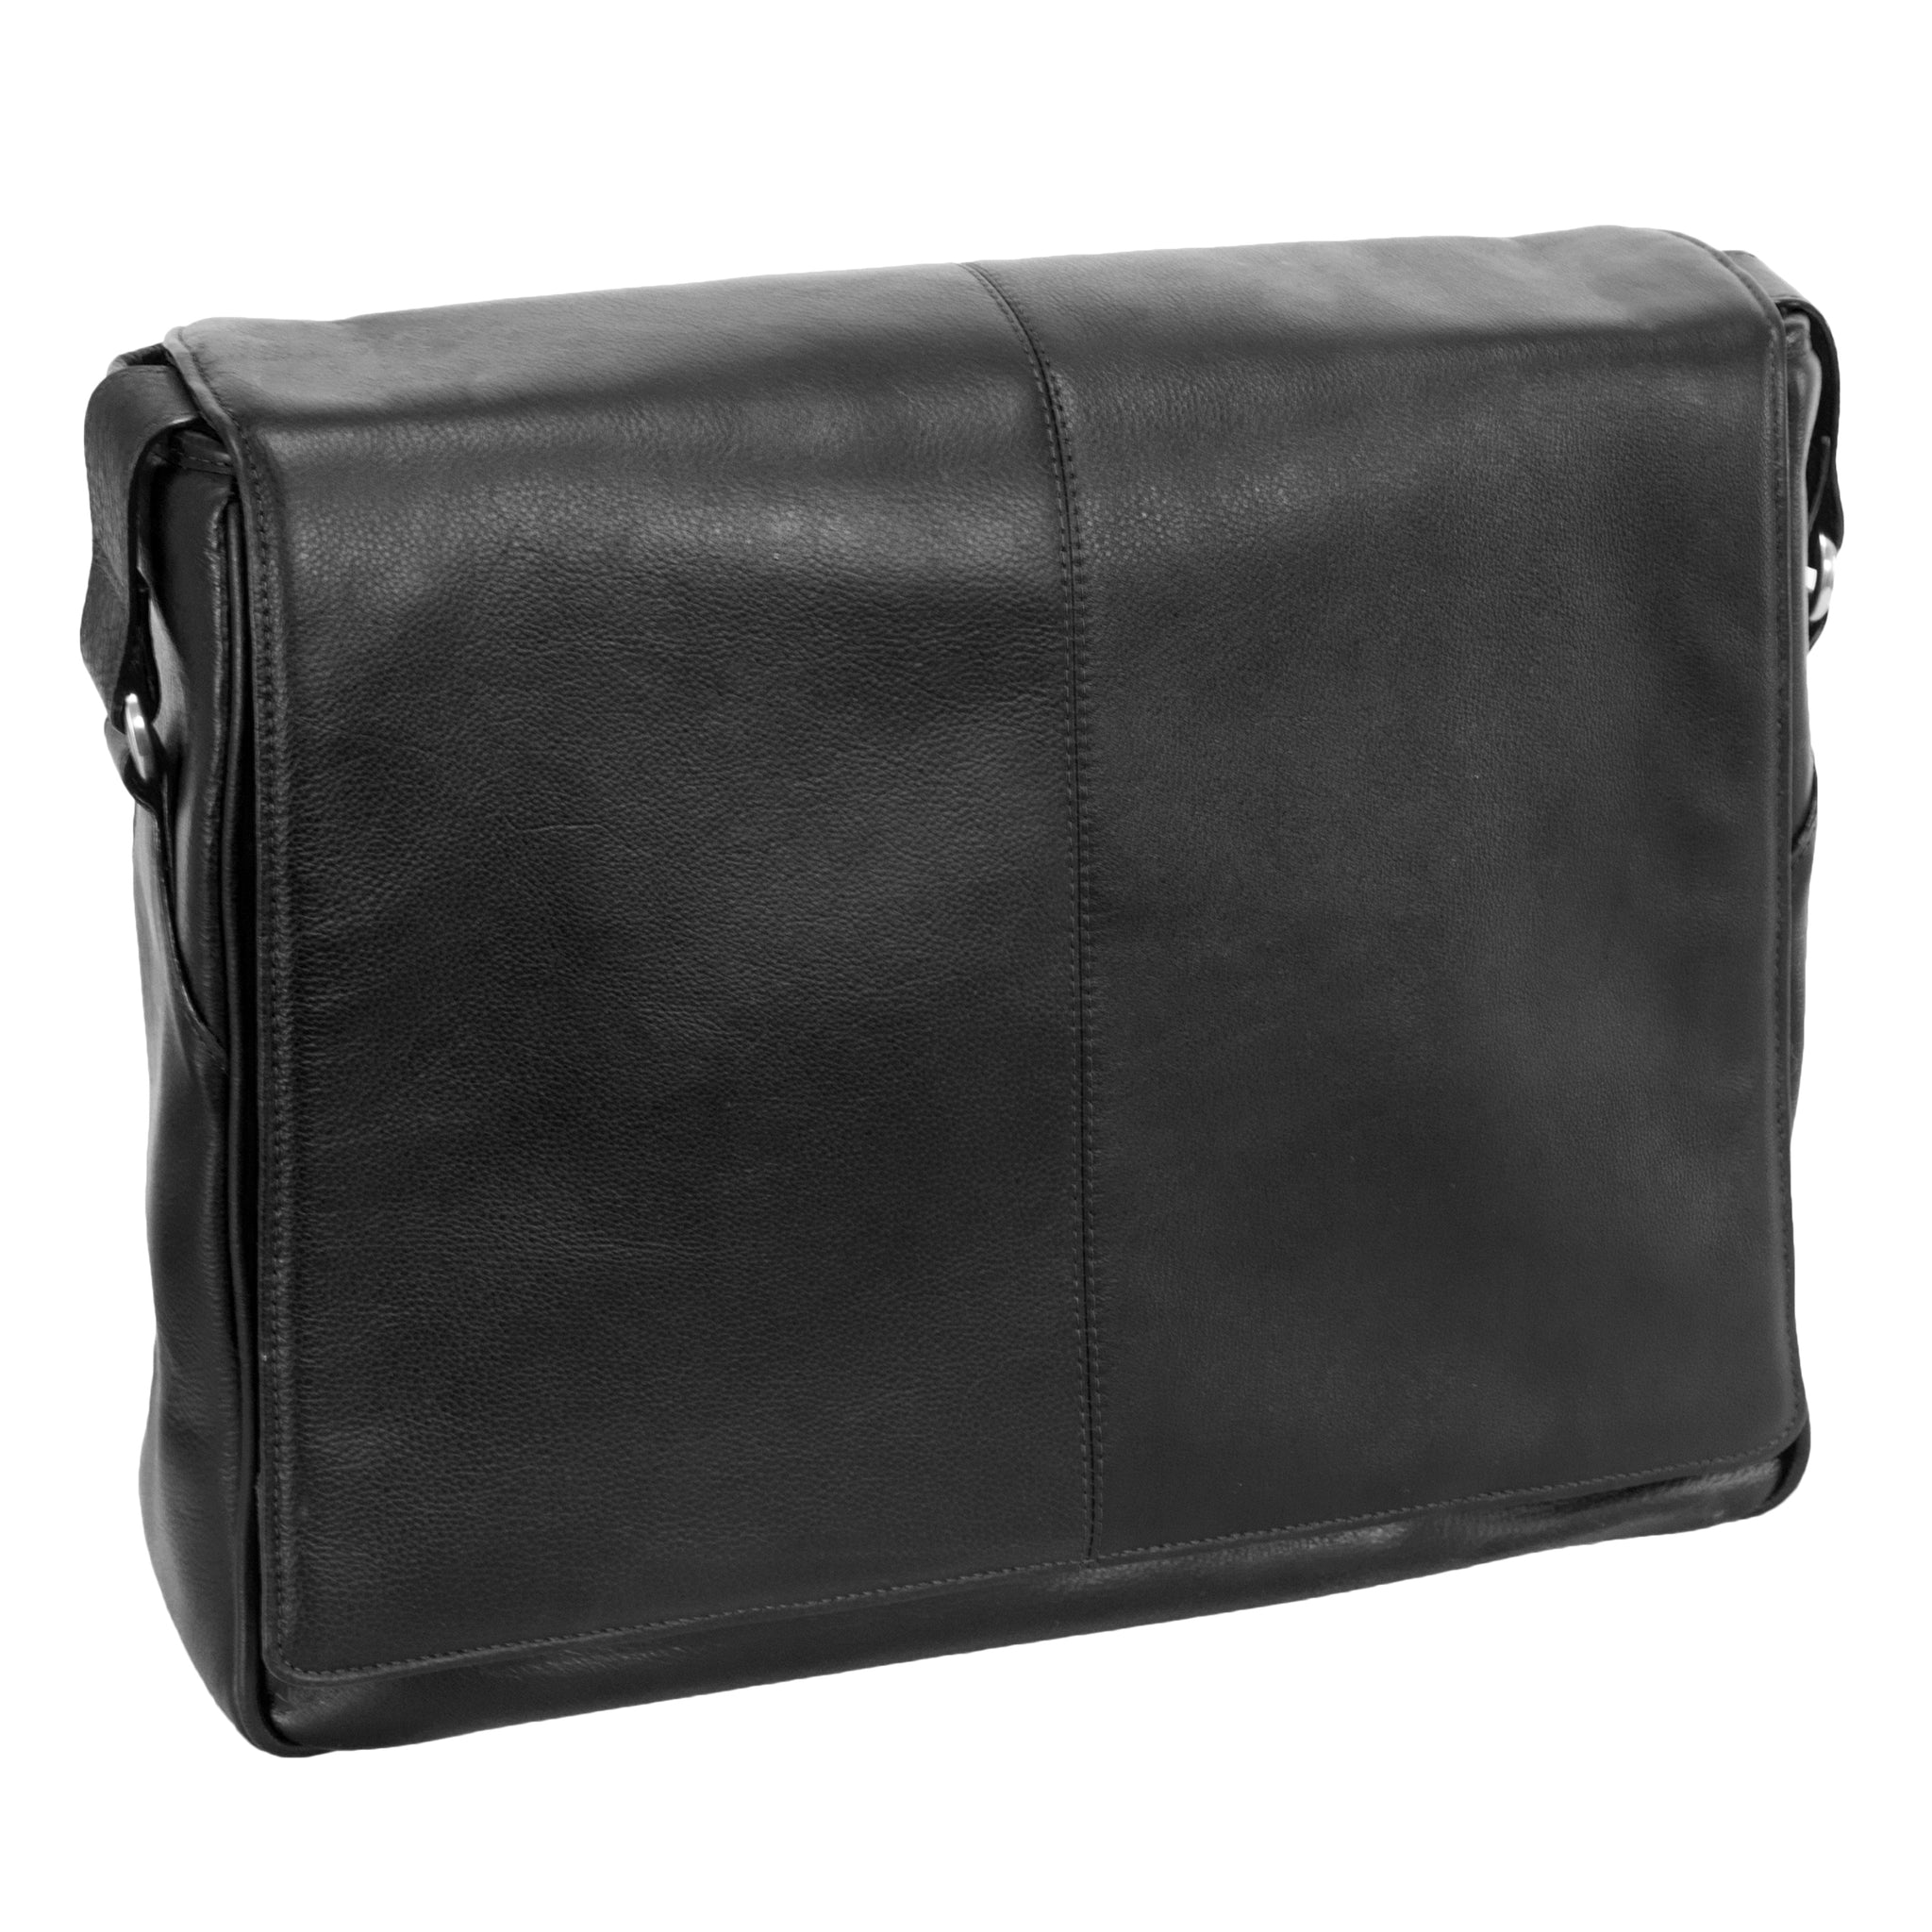 Siamod SAN FRANCESCO 13" Leather Messenger Bag